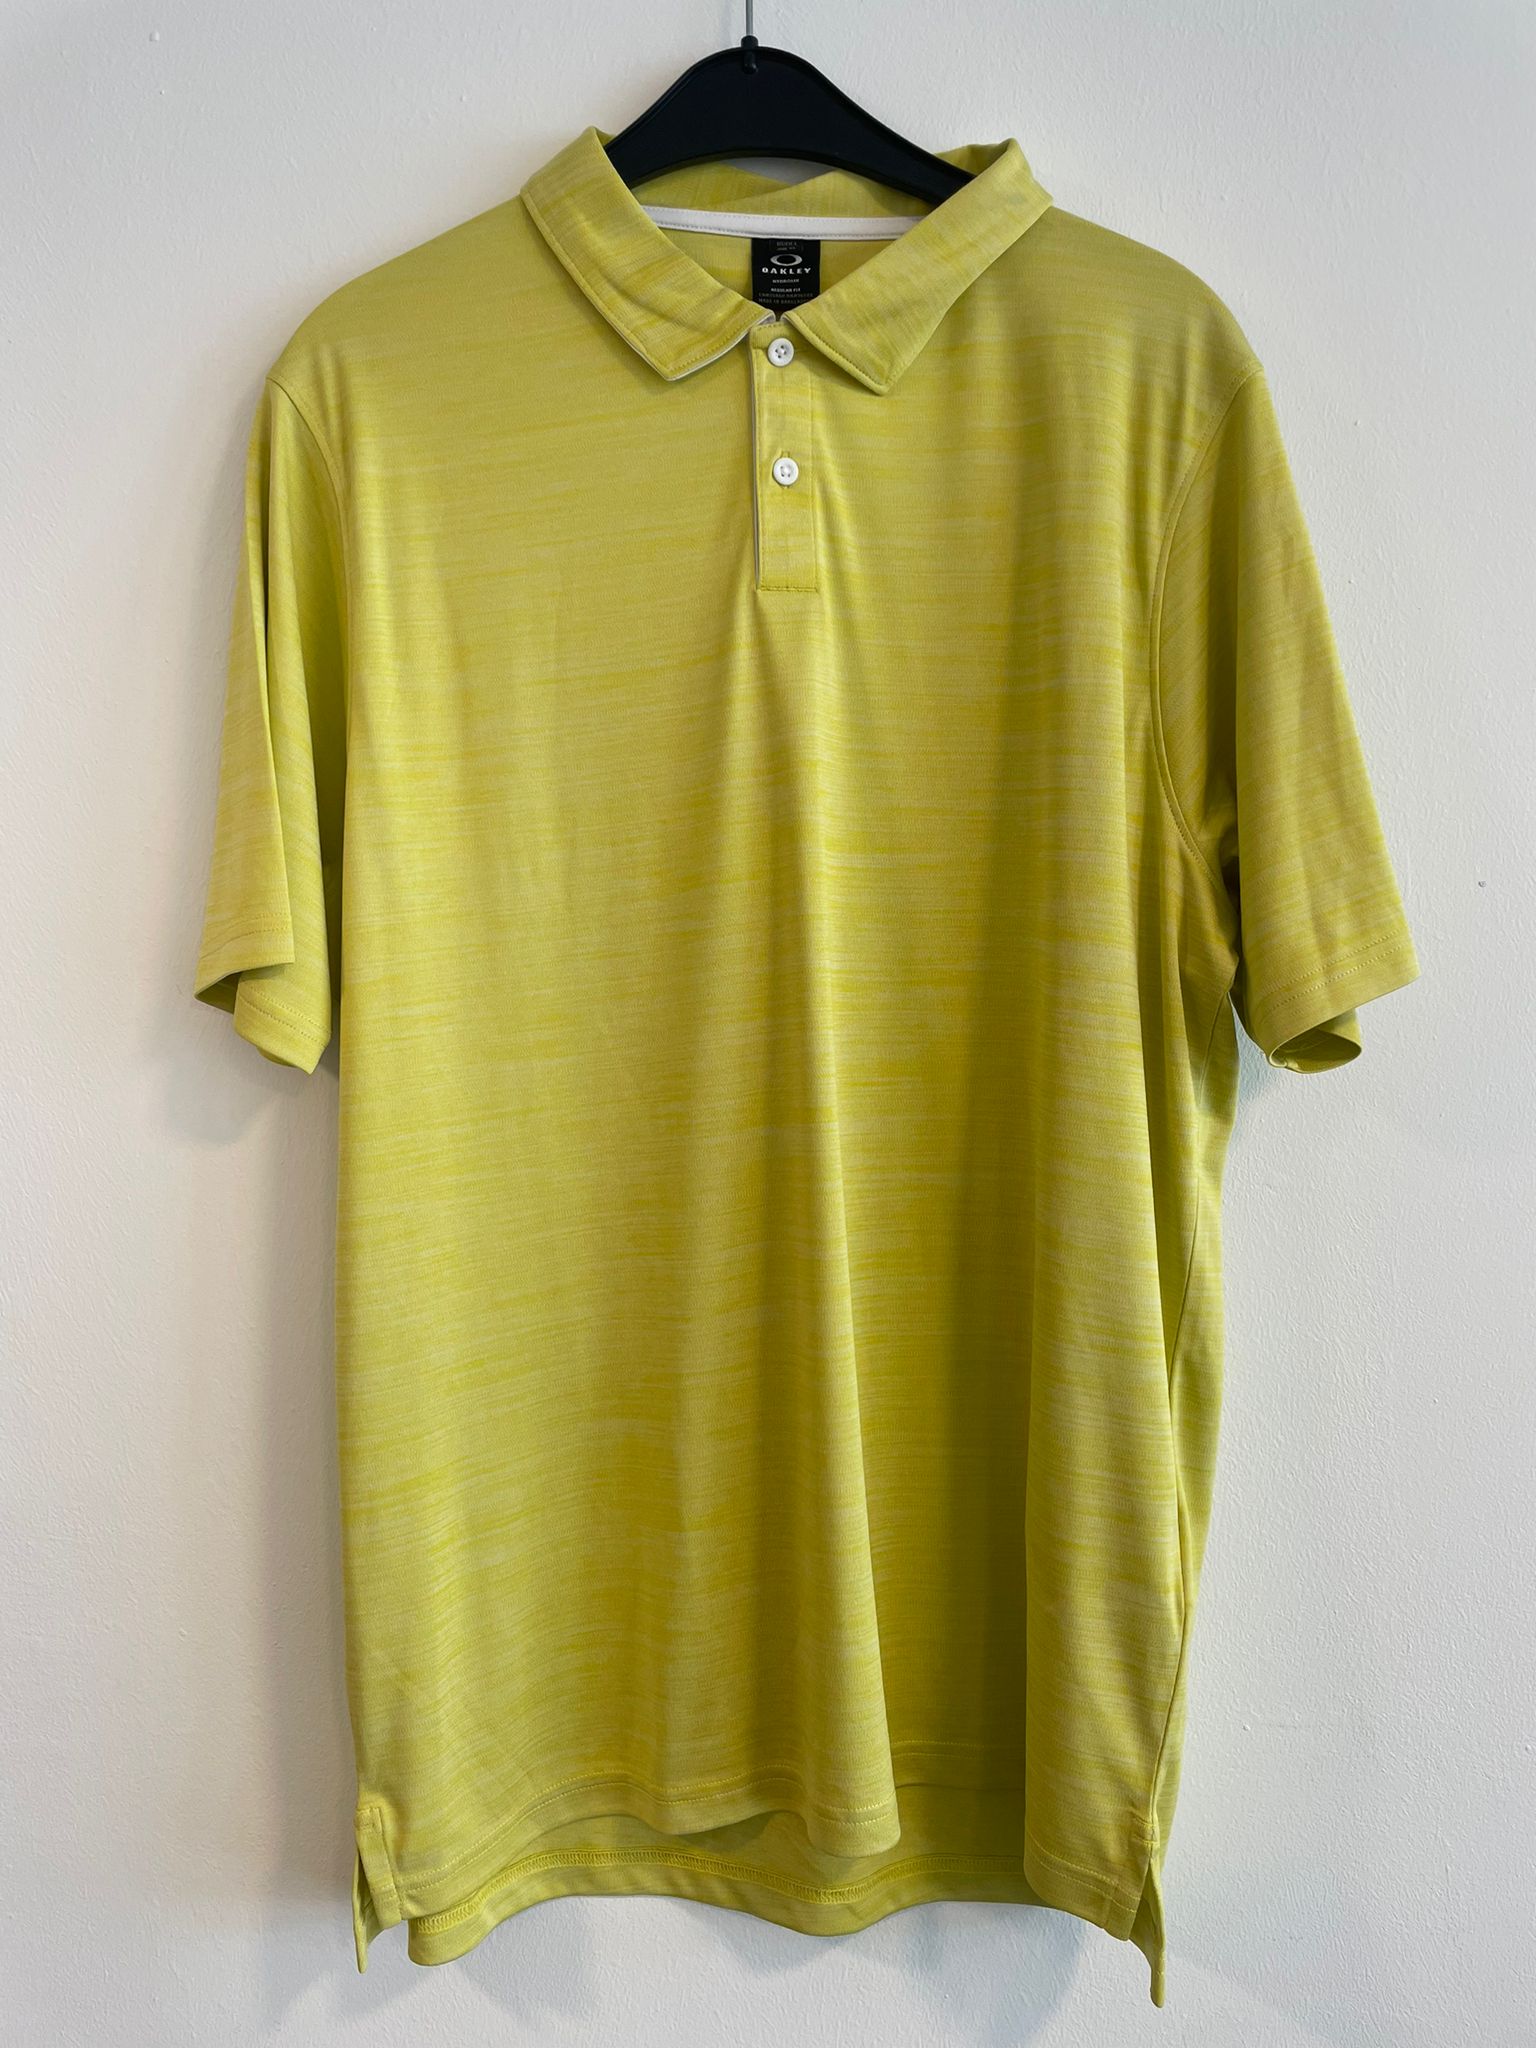 Oakley Aero Hydrolix Polo shirt yellow / white heather